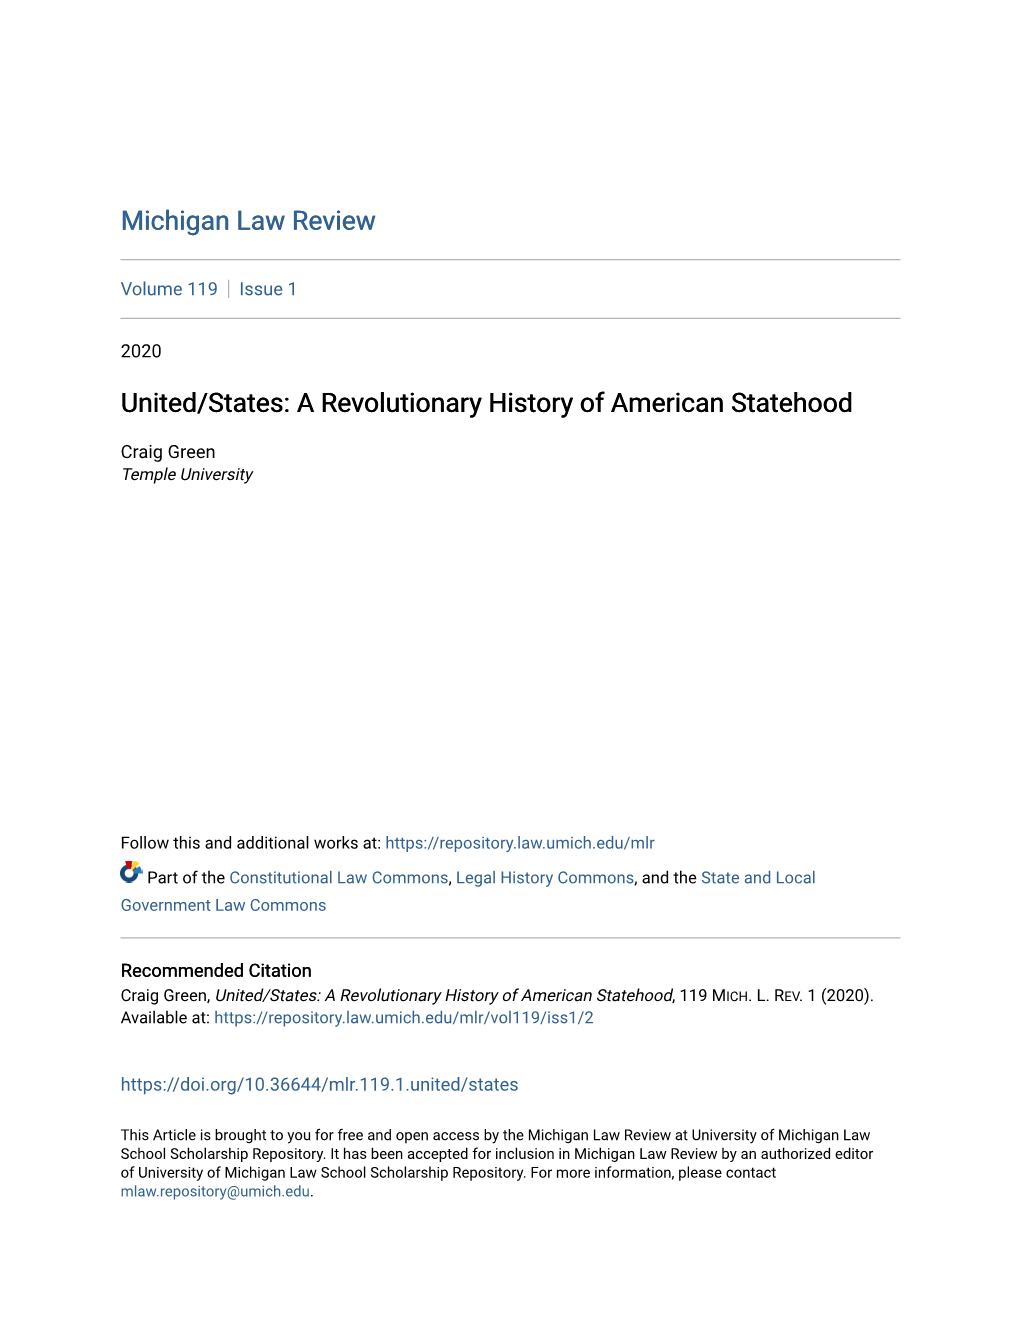 A Revolutionary History of American Statehood